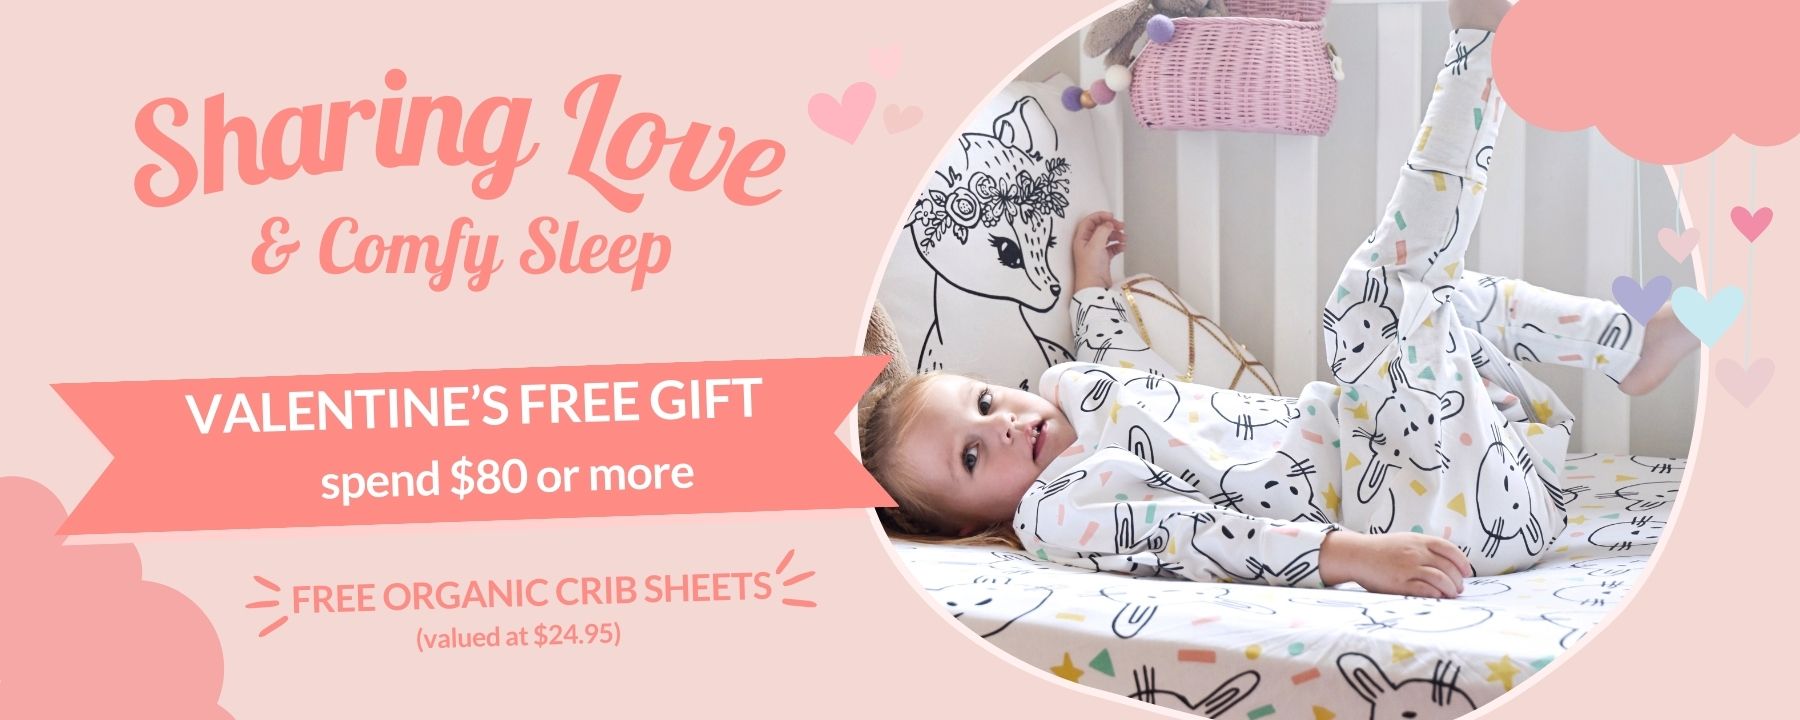 Valentine's Free Organic Crib Sheets Offer